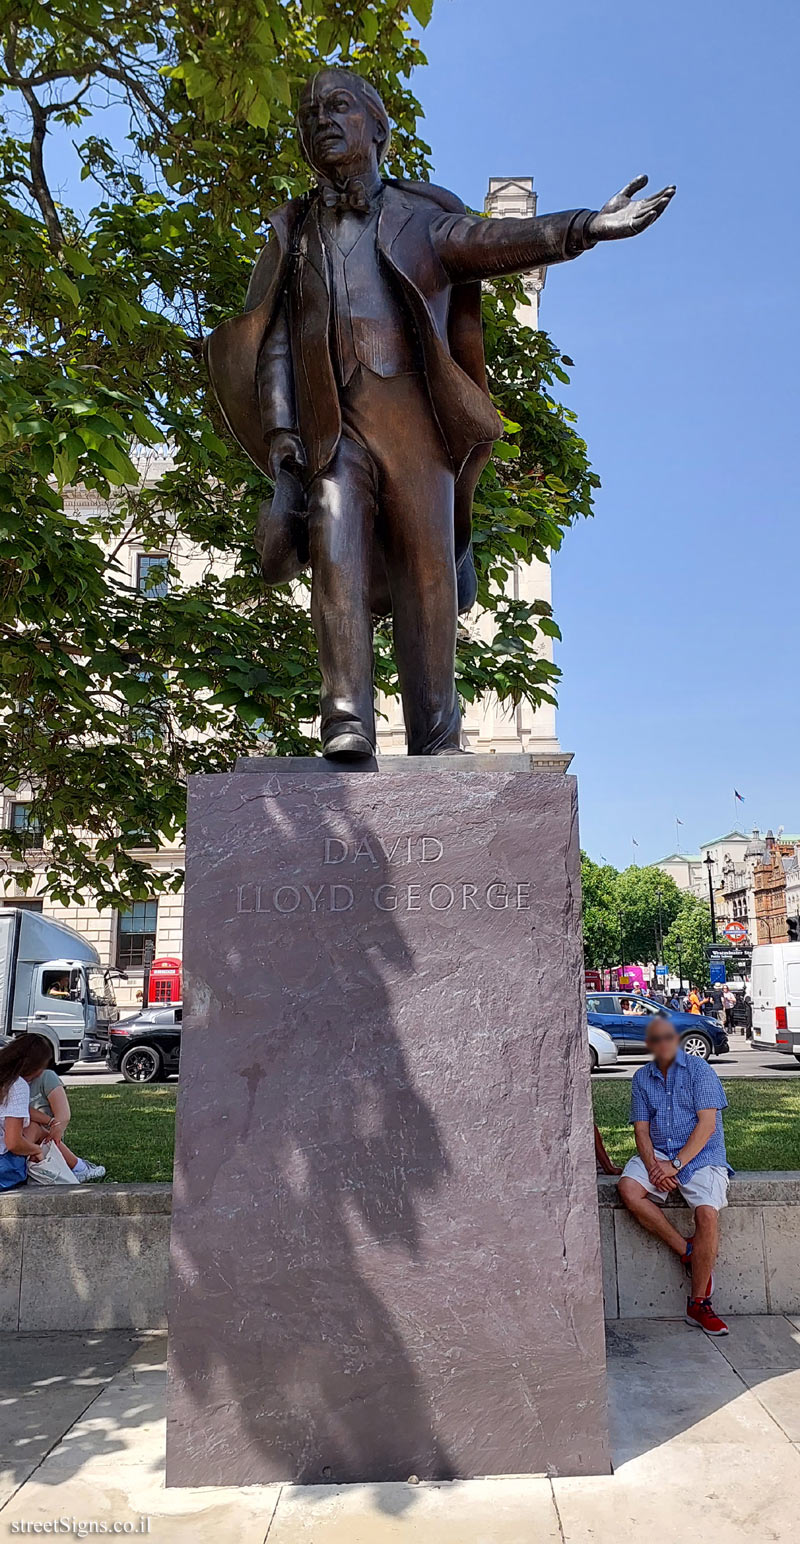 London - David Lloyd George statue - 1 Horse Guards Rd, London SW1A 2HQ, UK